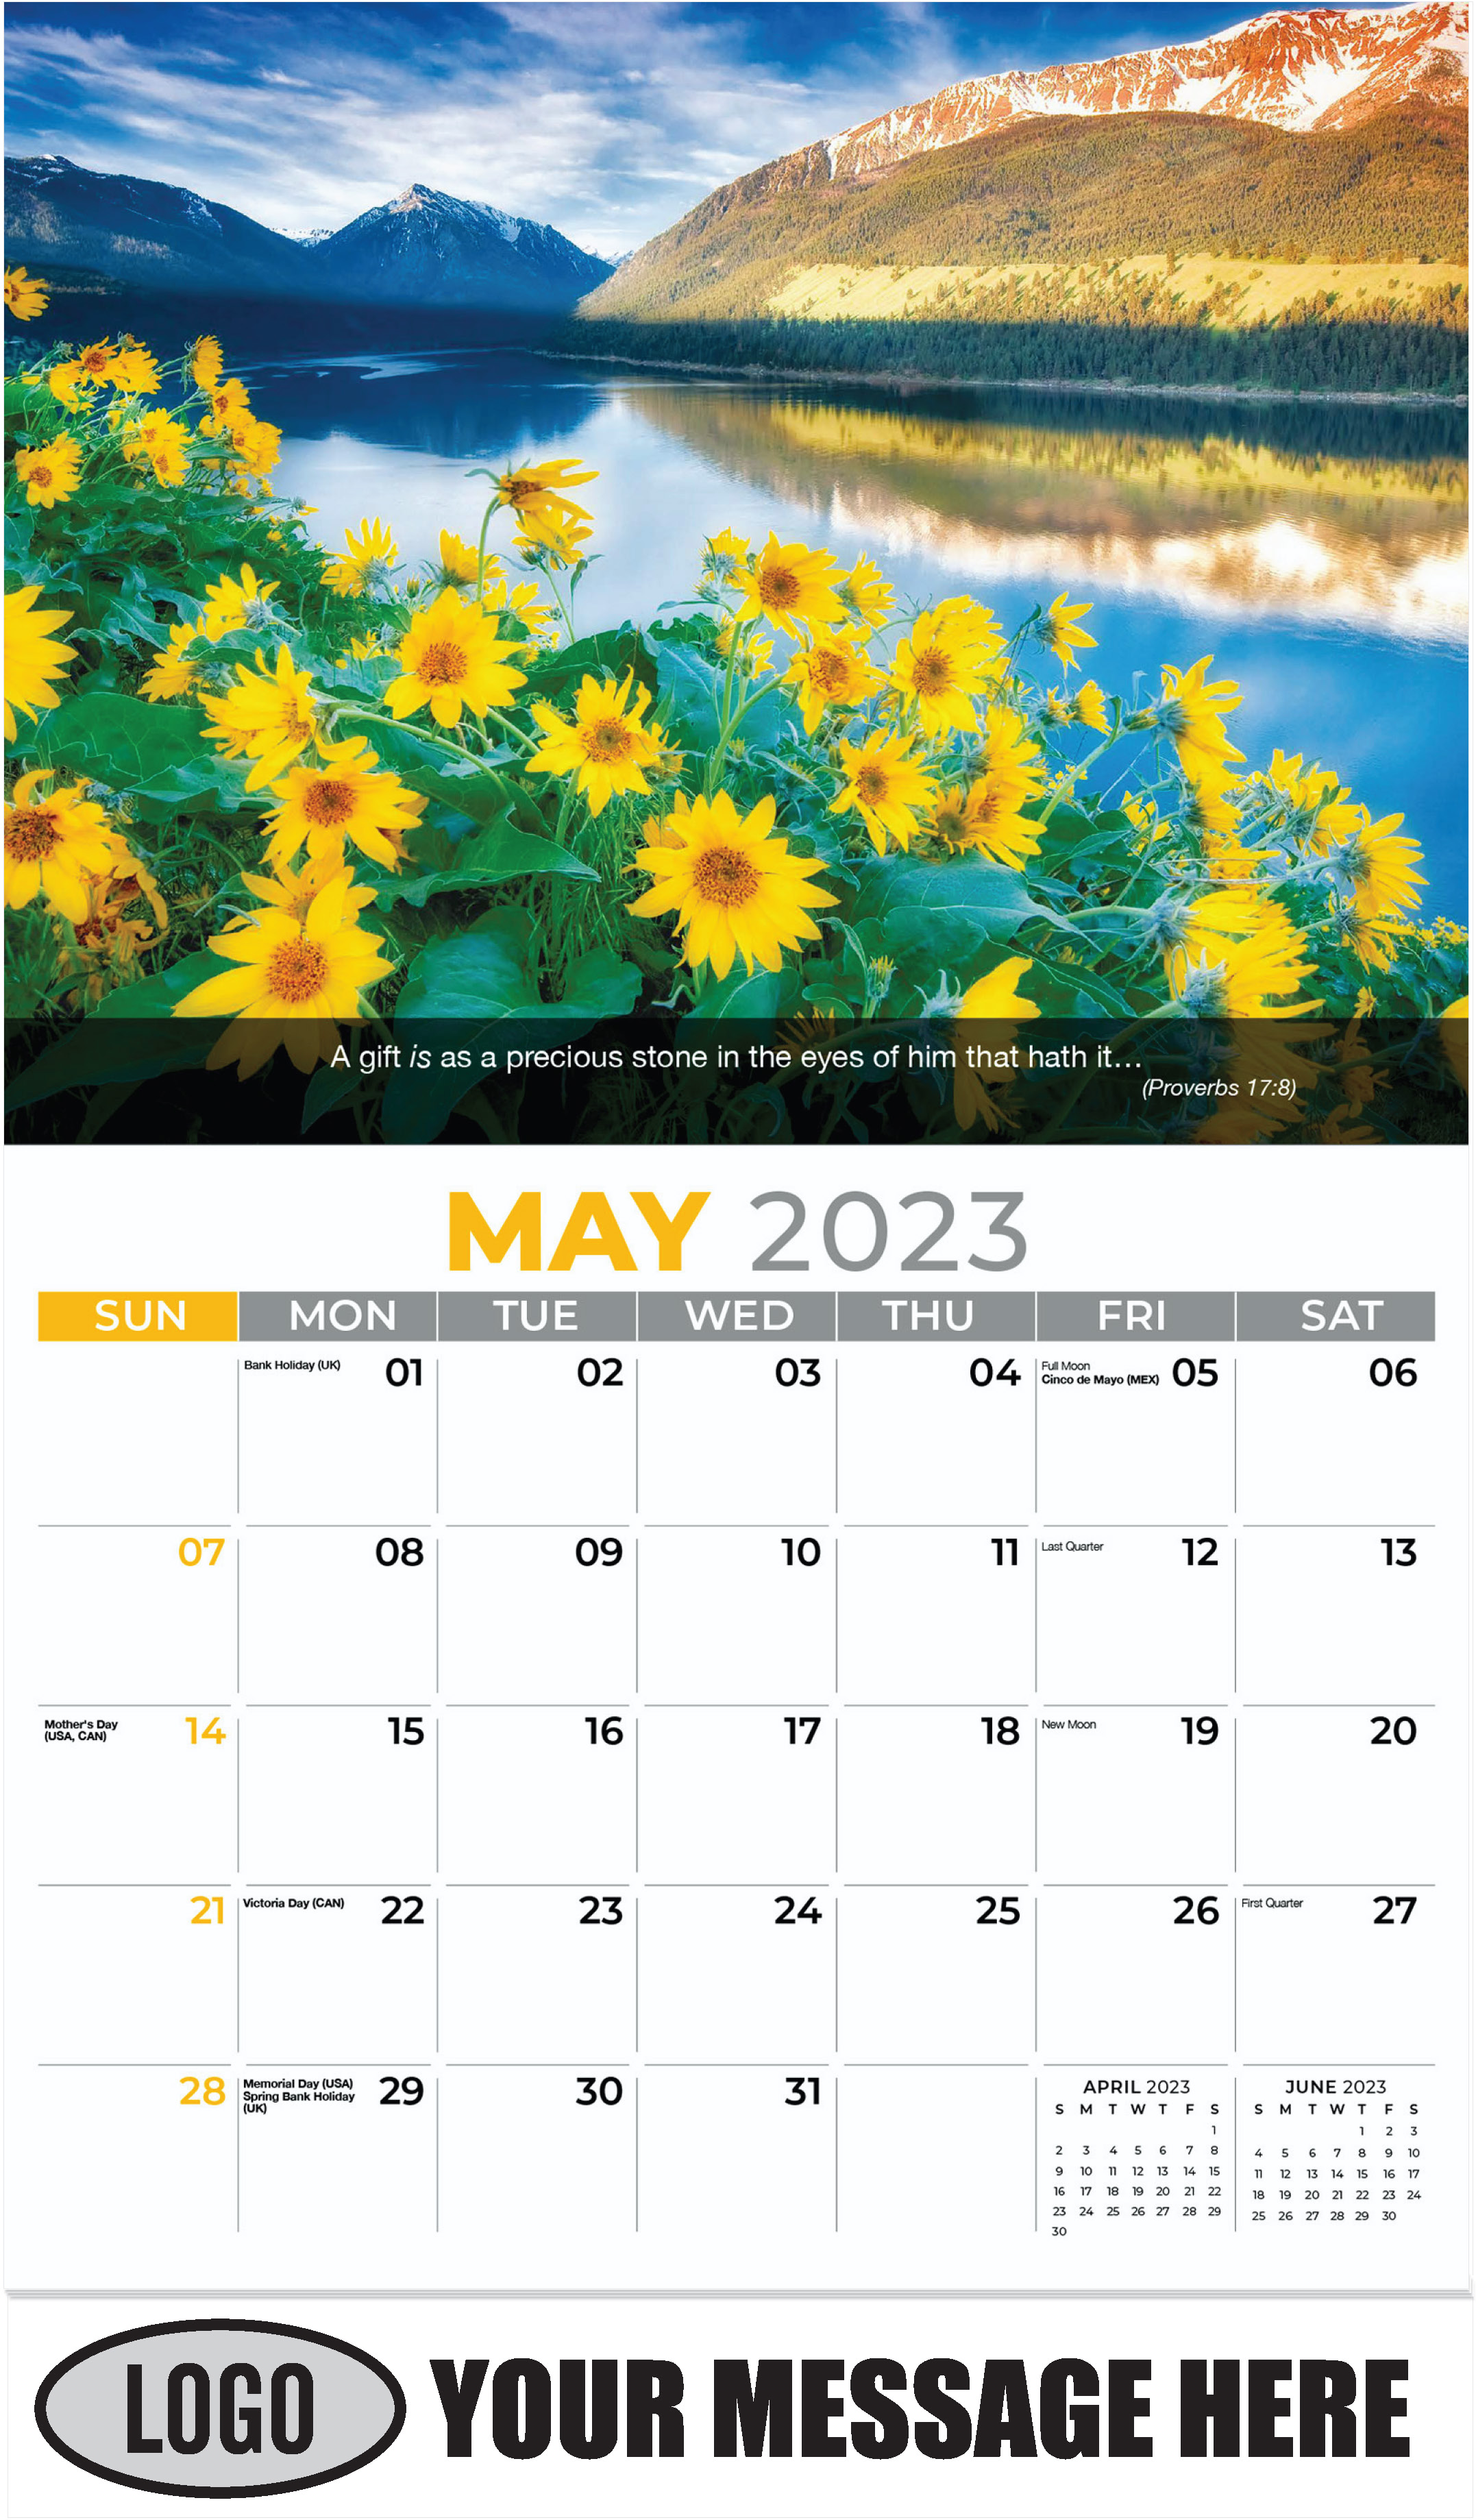 Wallowa Lake and Mountains, Oregon - May - Faith Passages 2023 Promotional Calendar